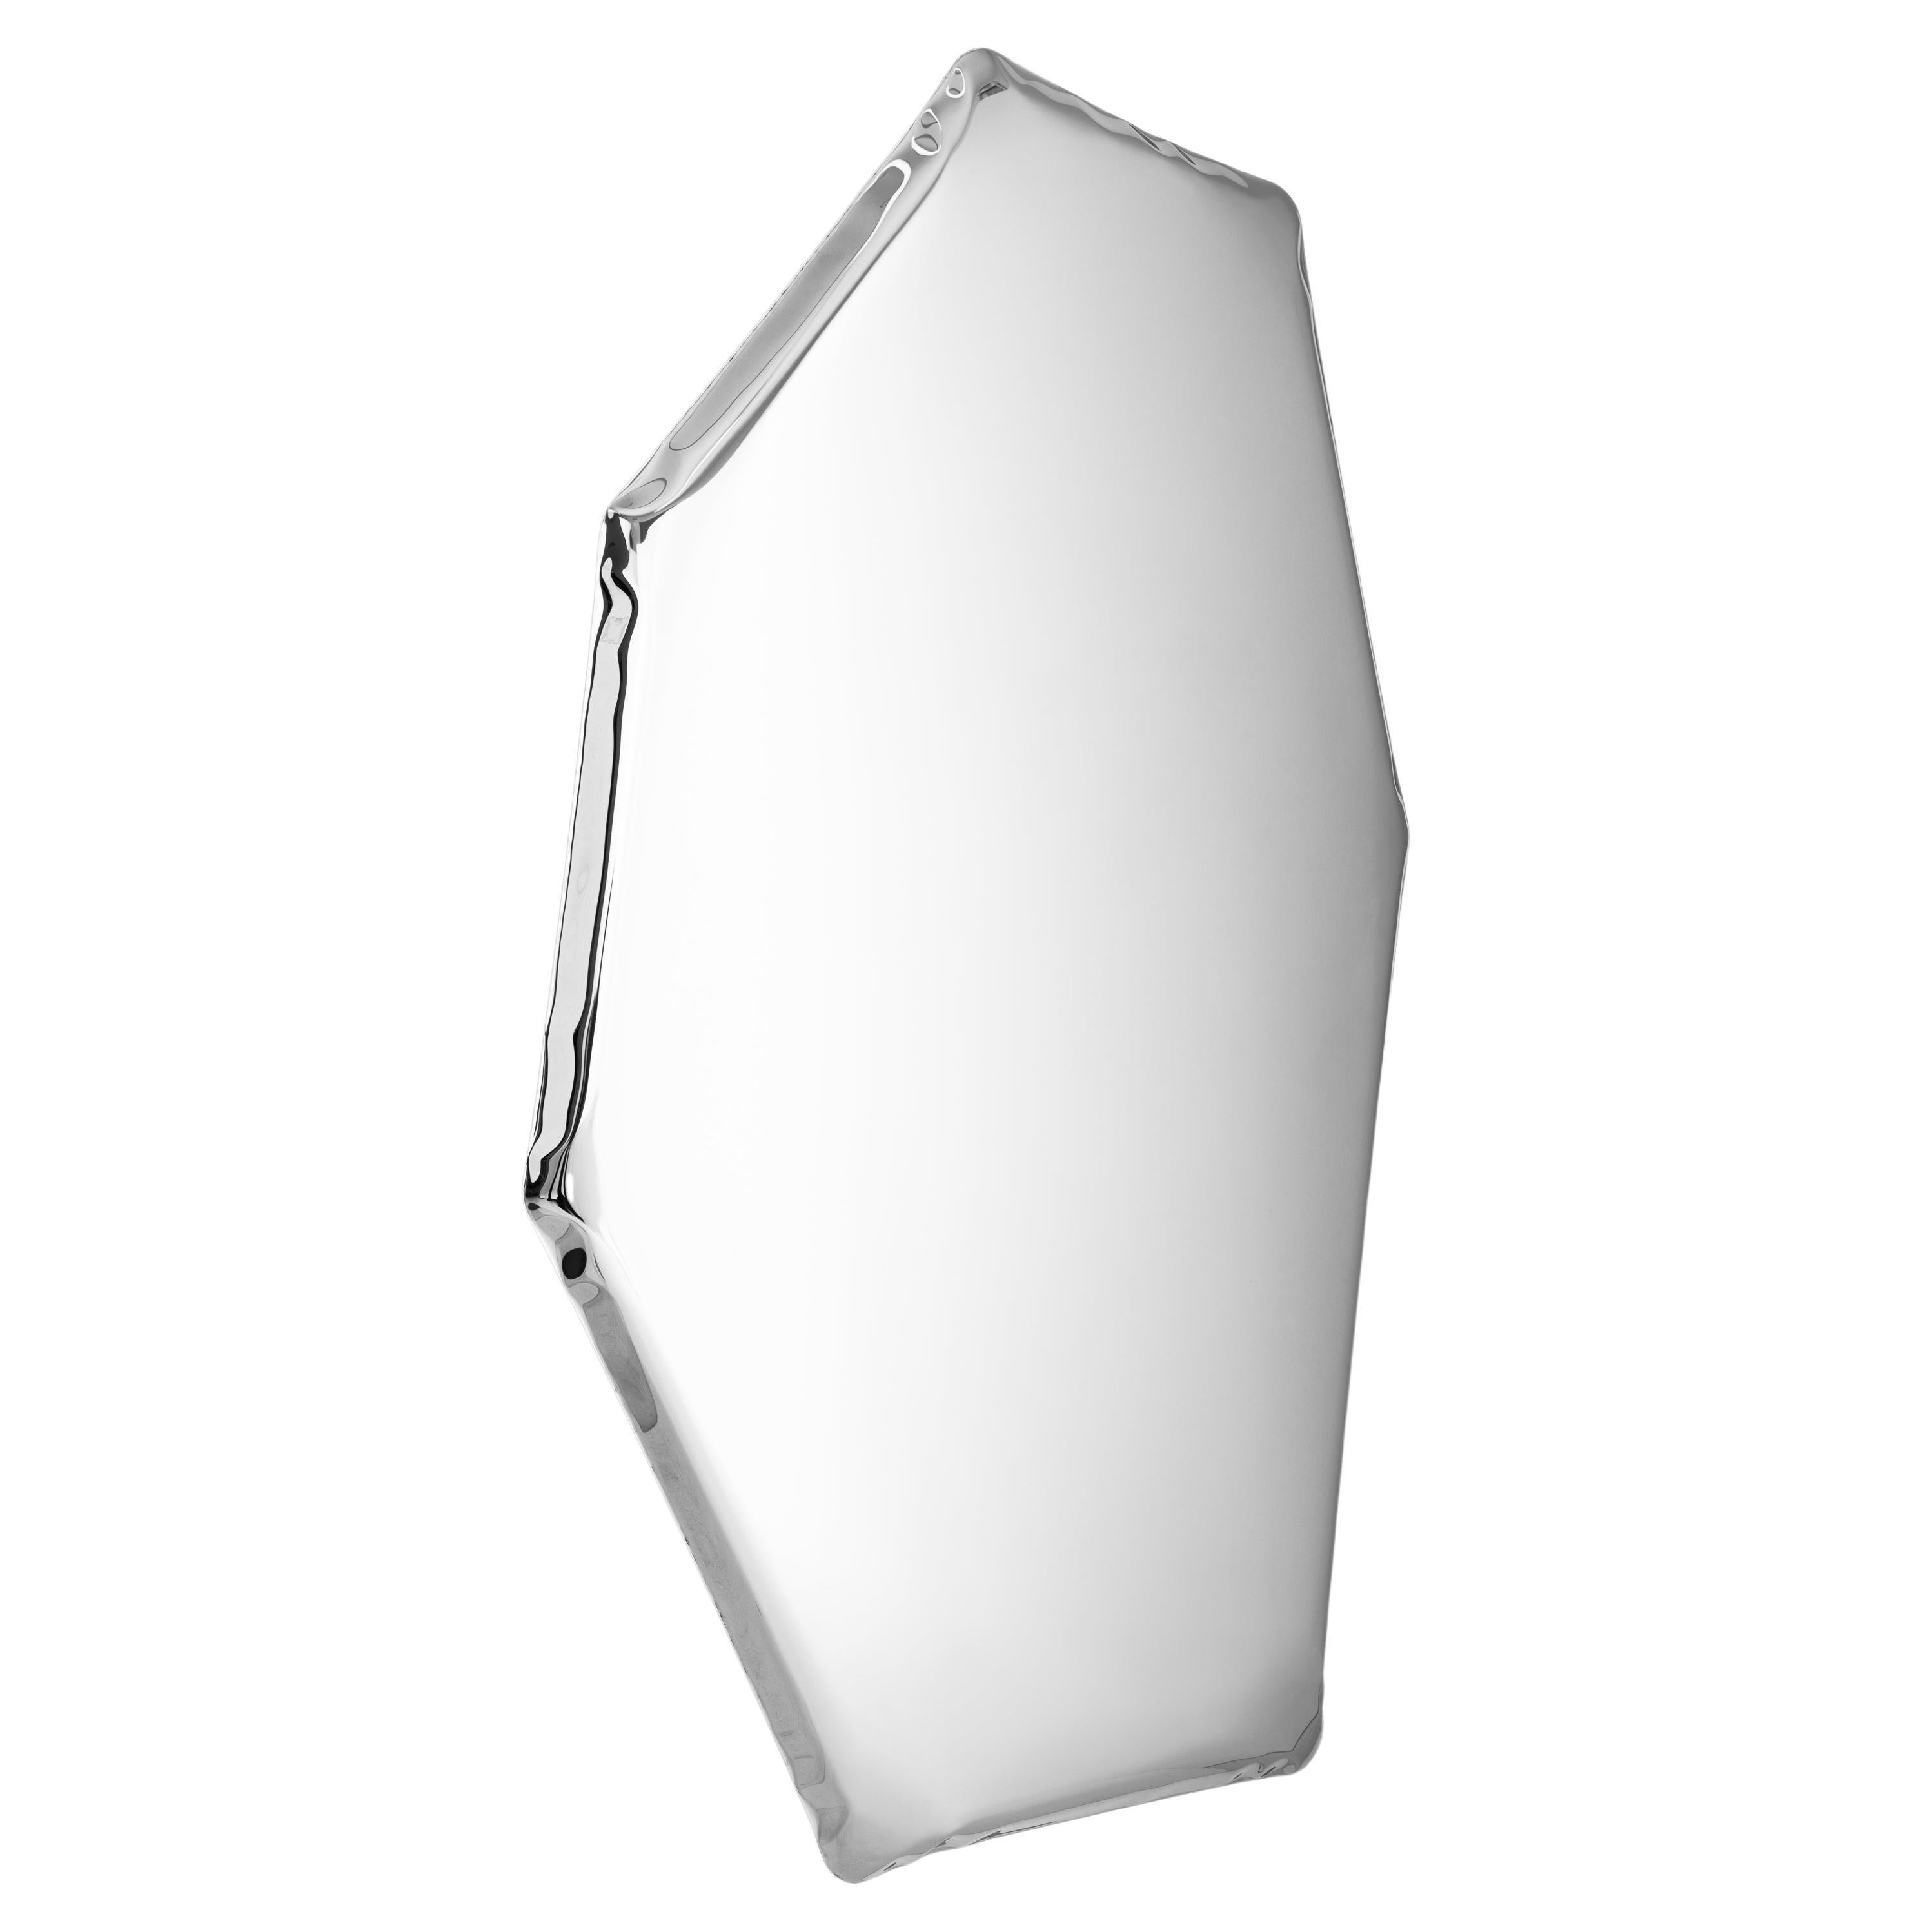 Tafla C2 Polished Stainless Steel Wall Mirror by Zieta